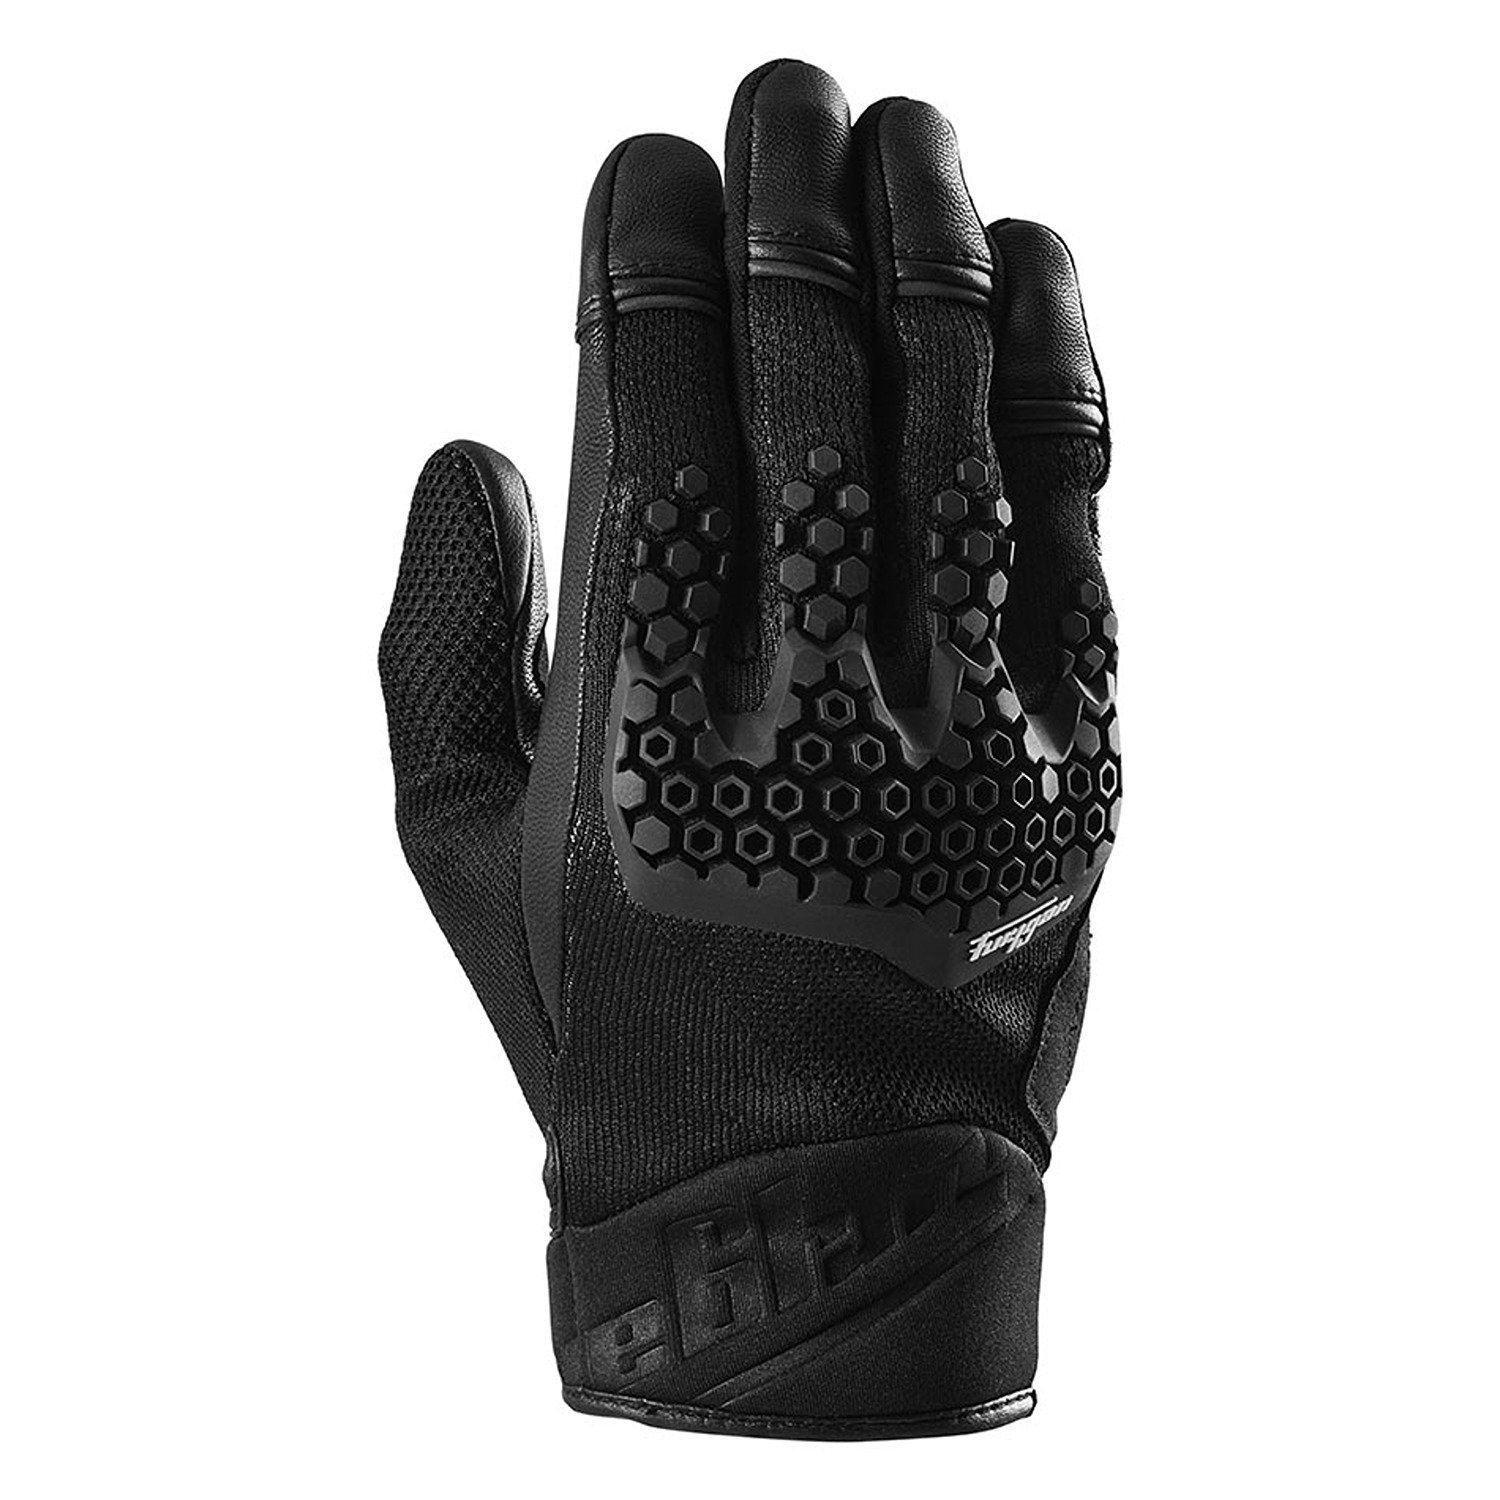 Image of Furygan Jack Gloves Black Size S ID 3435980383534